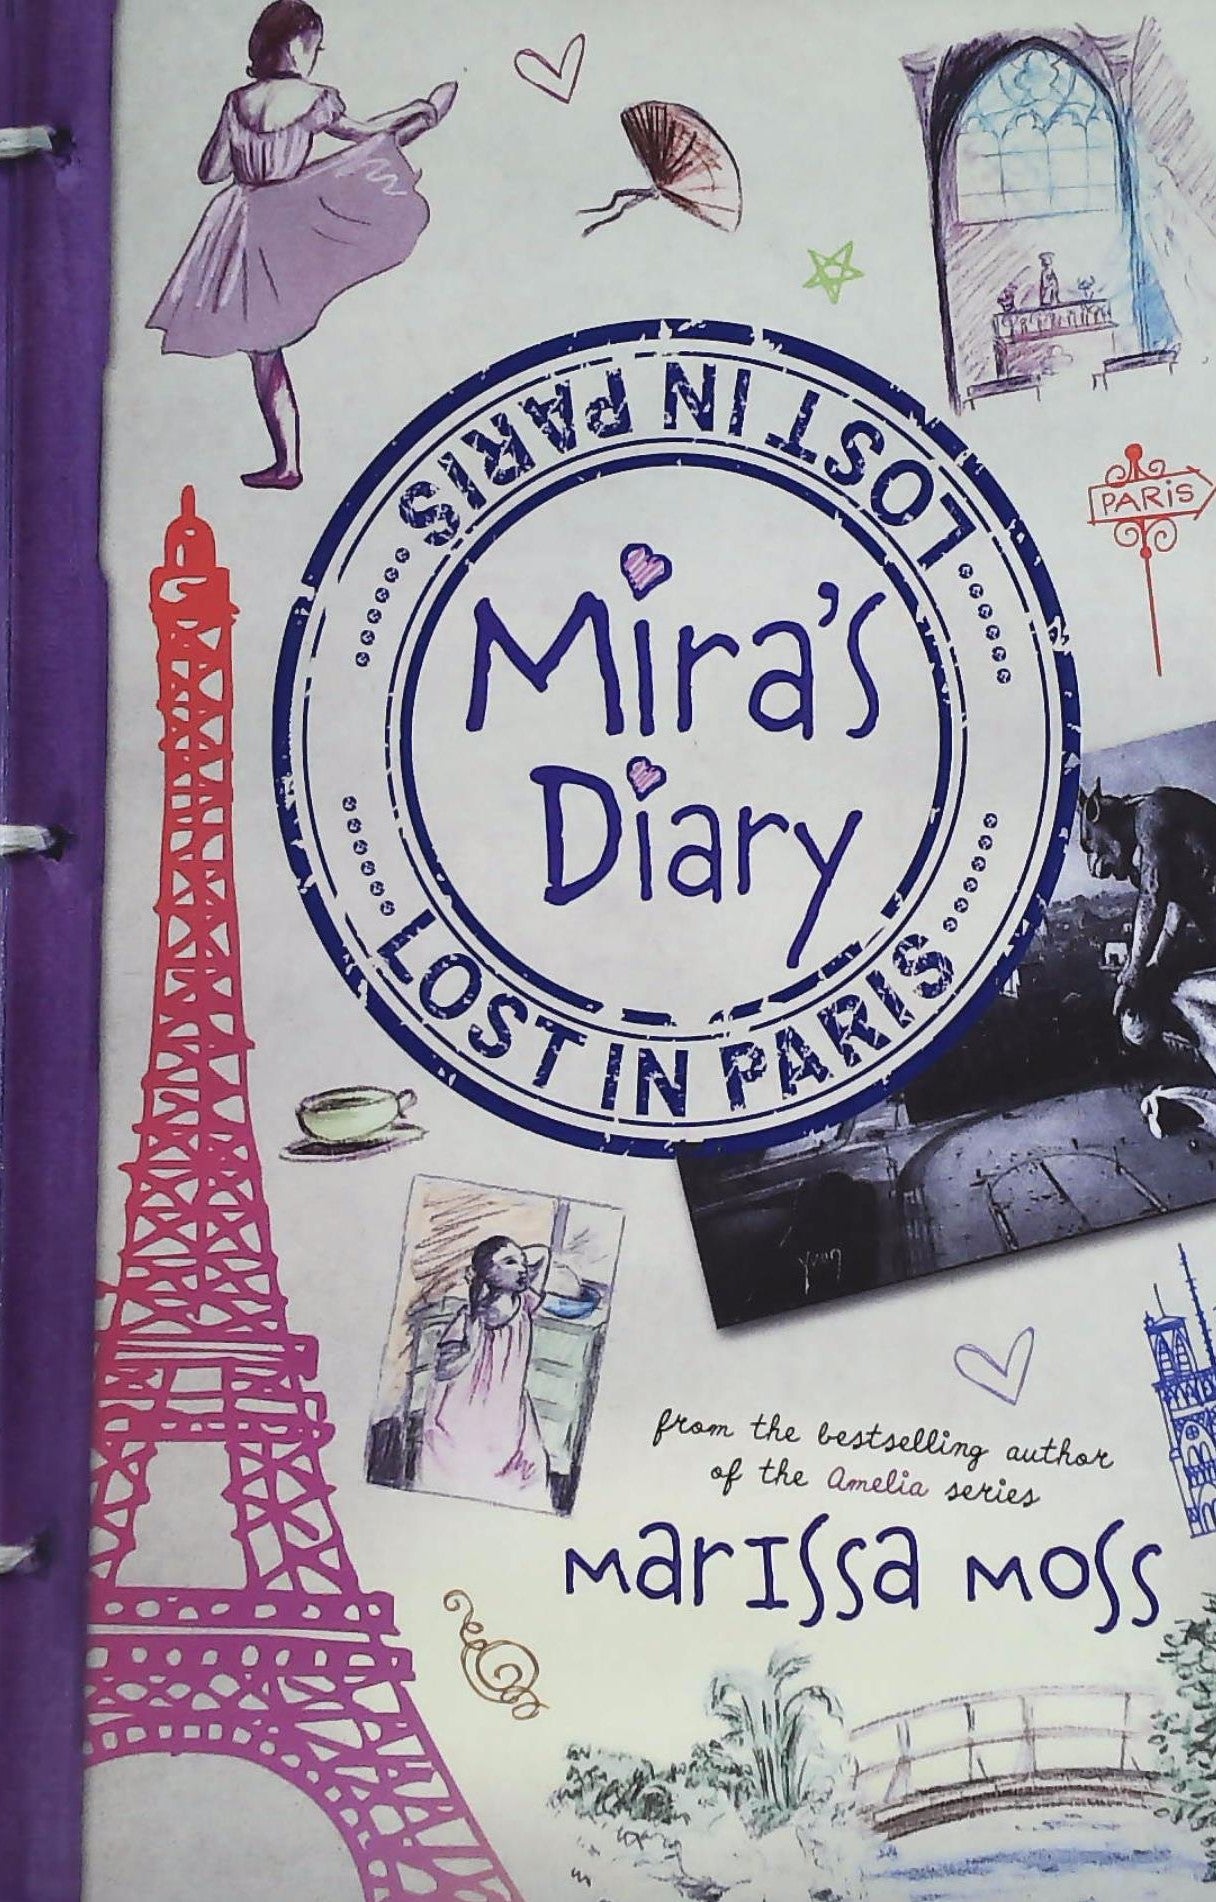 Livre ISBN 1402266065 Maria's Diary : Lost in Paris (Marissa Moss)